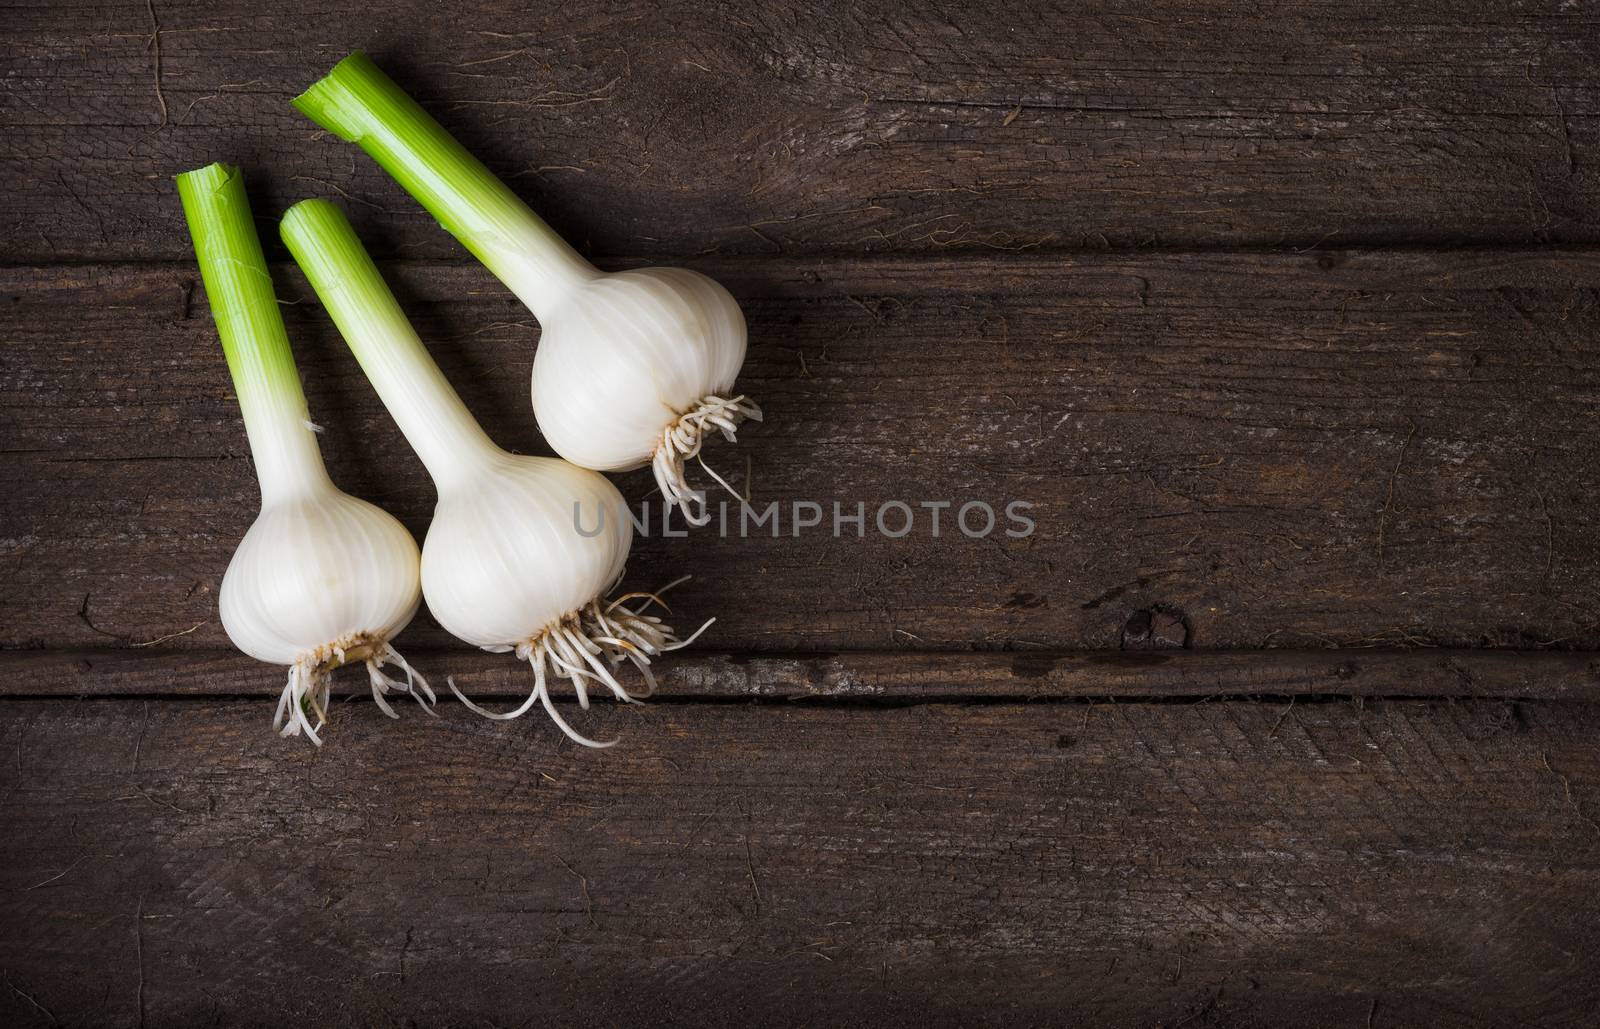 Fresh young garlic by iprachenko